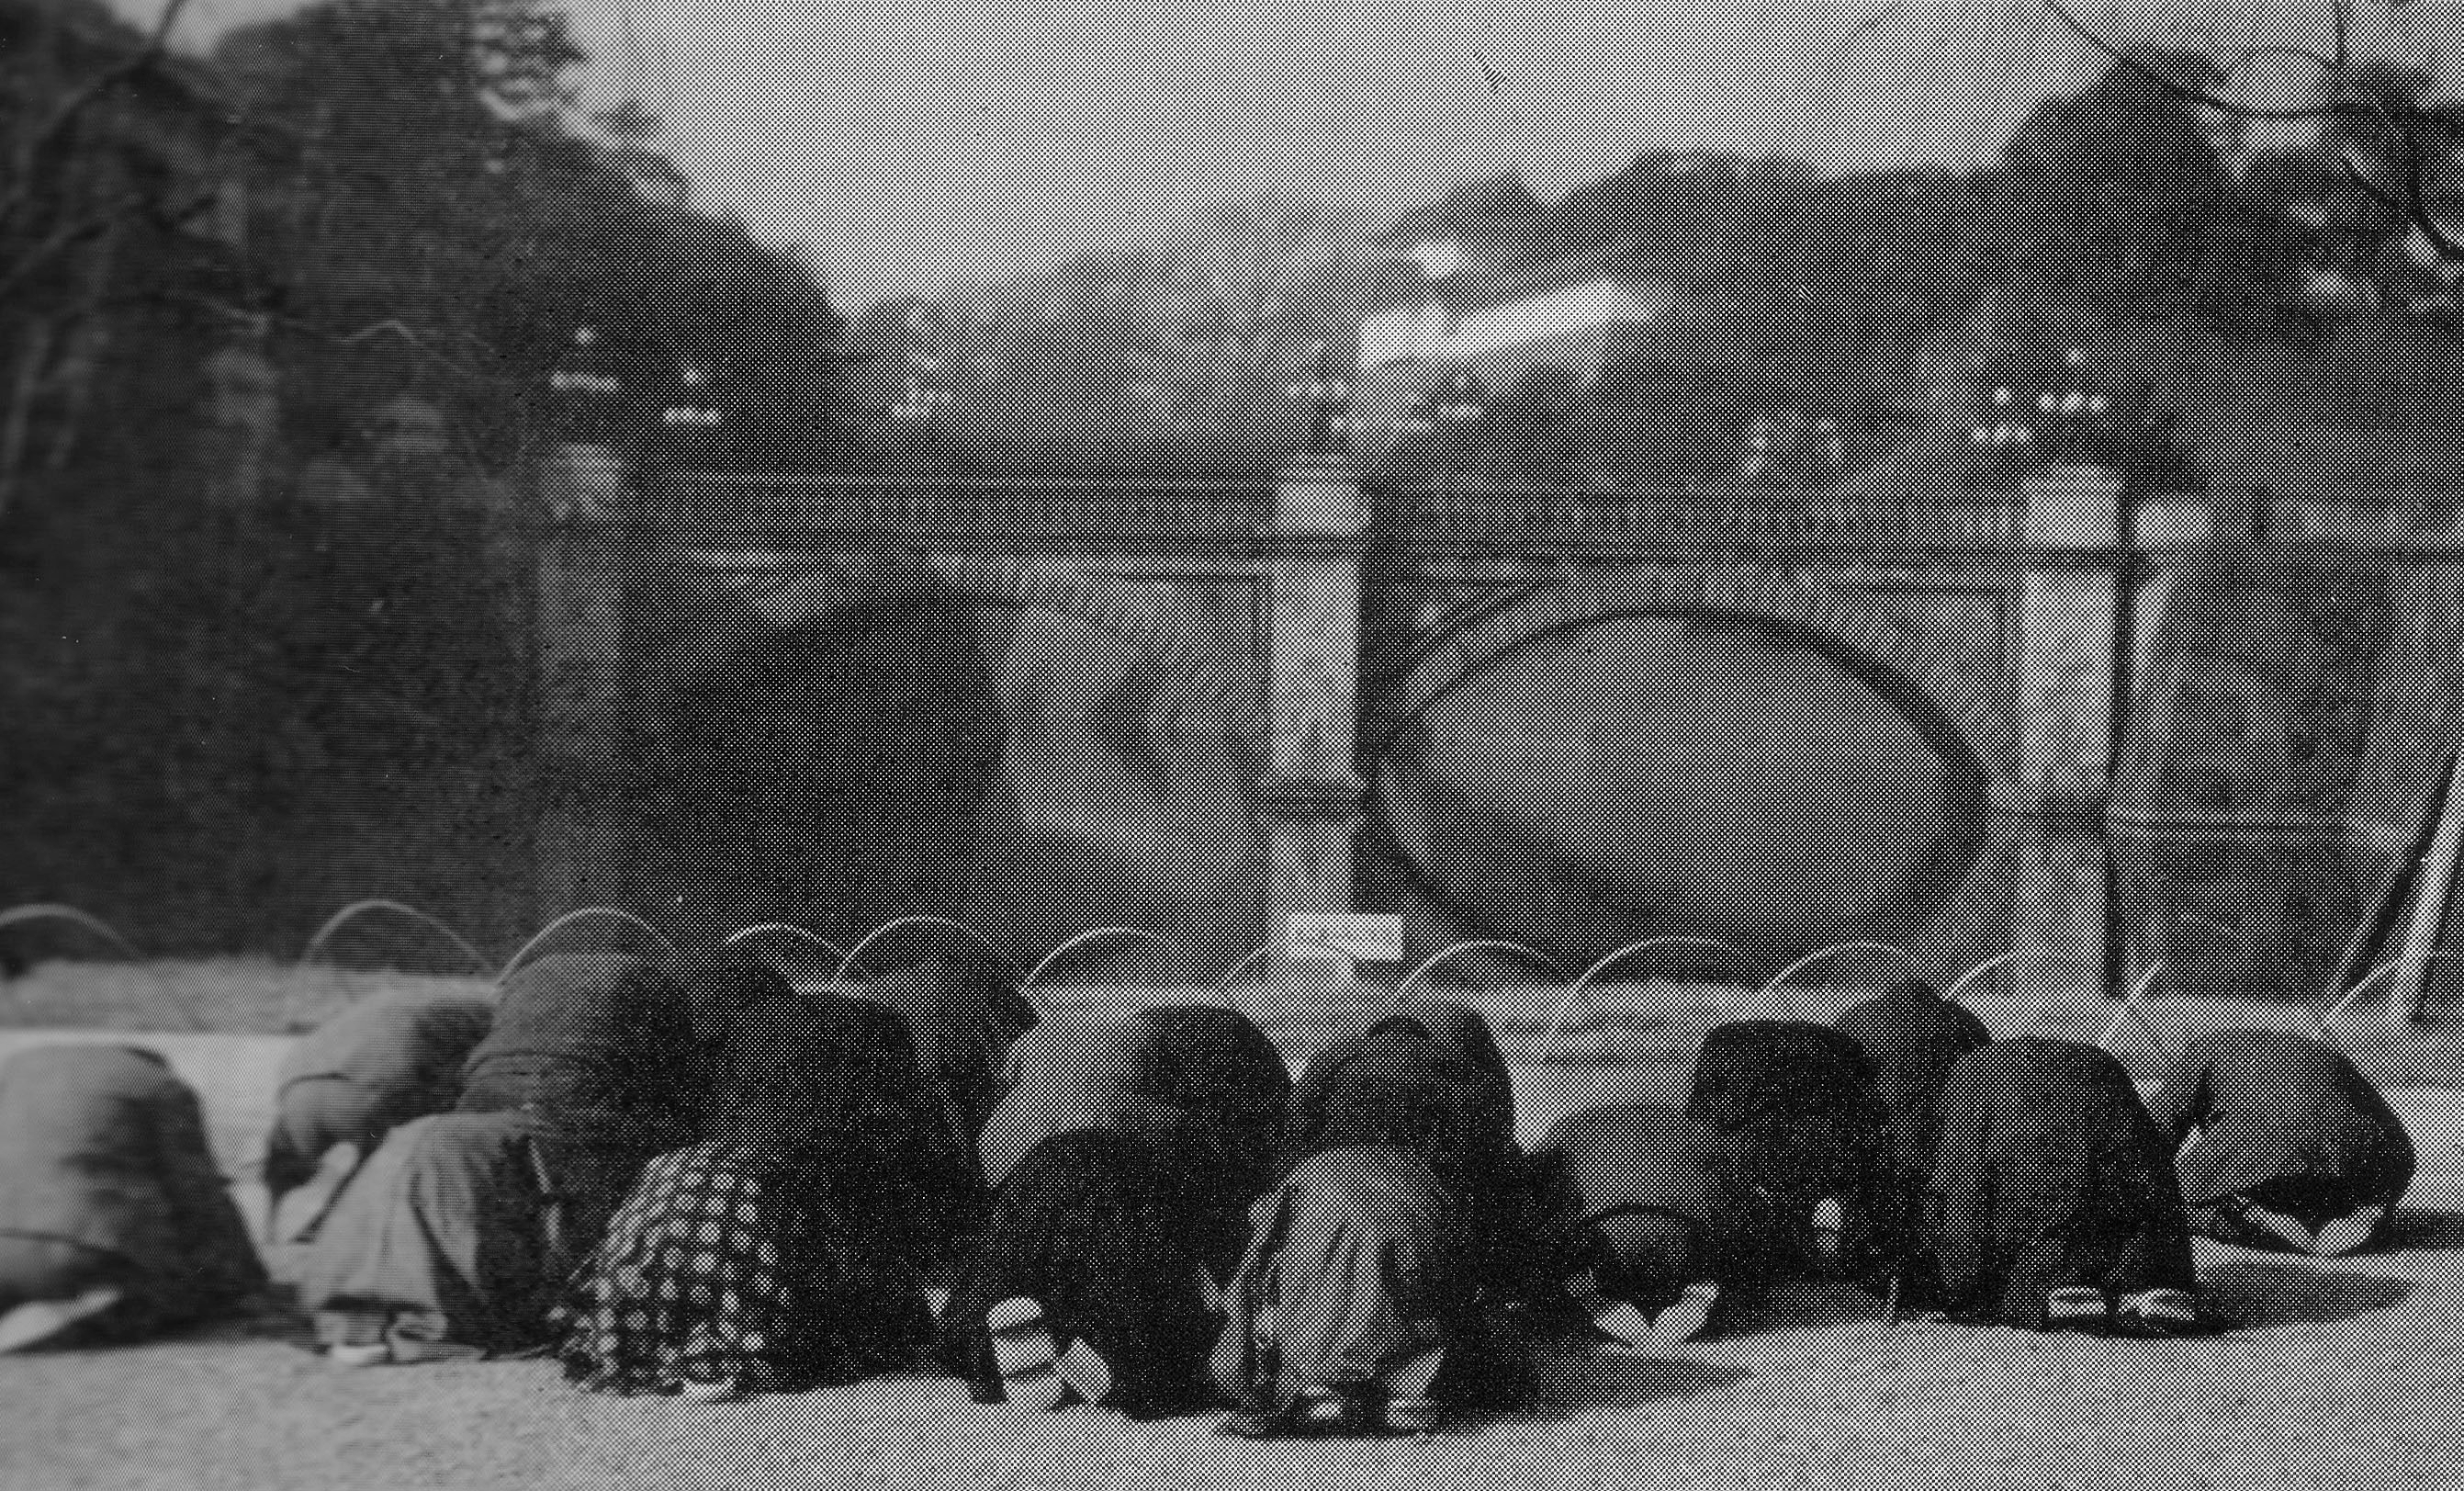 Japanese civilians outside the Imperial Palace near the Nijubashi bridges, Tokyo, Japan, 15 Aug 1945, photo 1 of 2